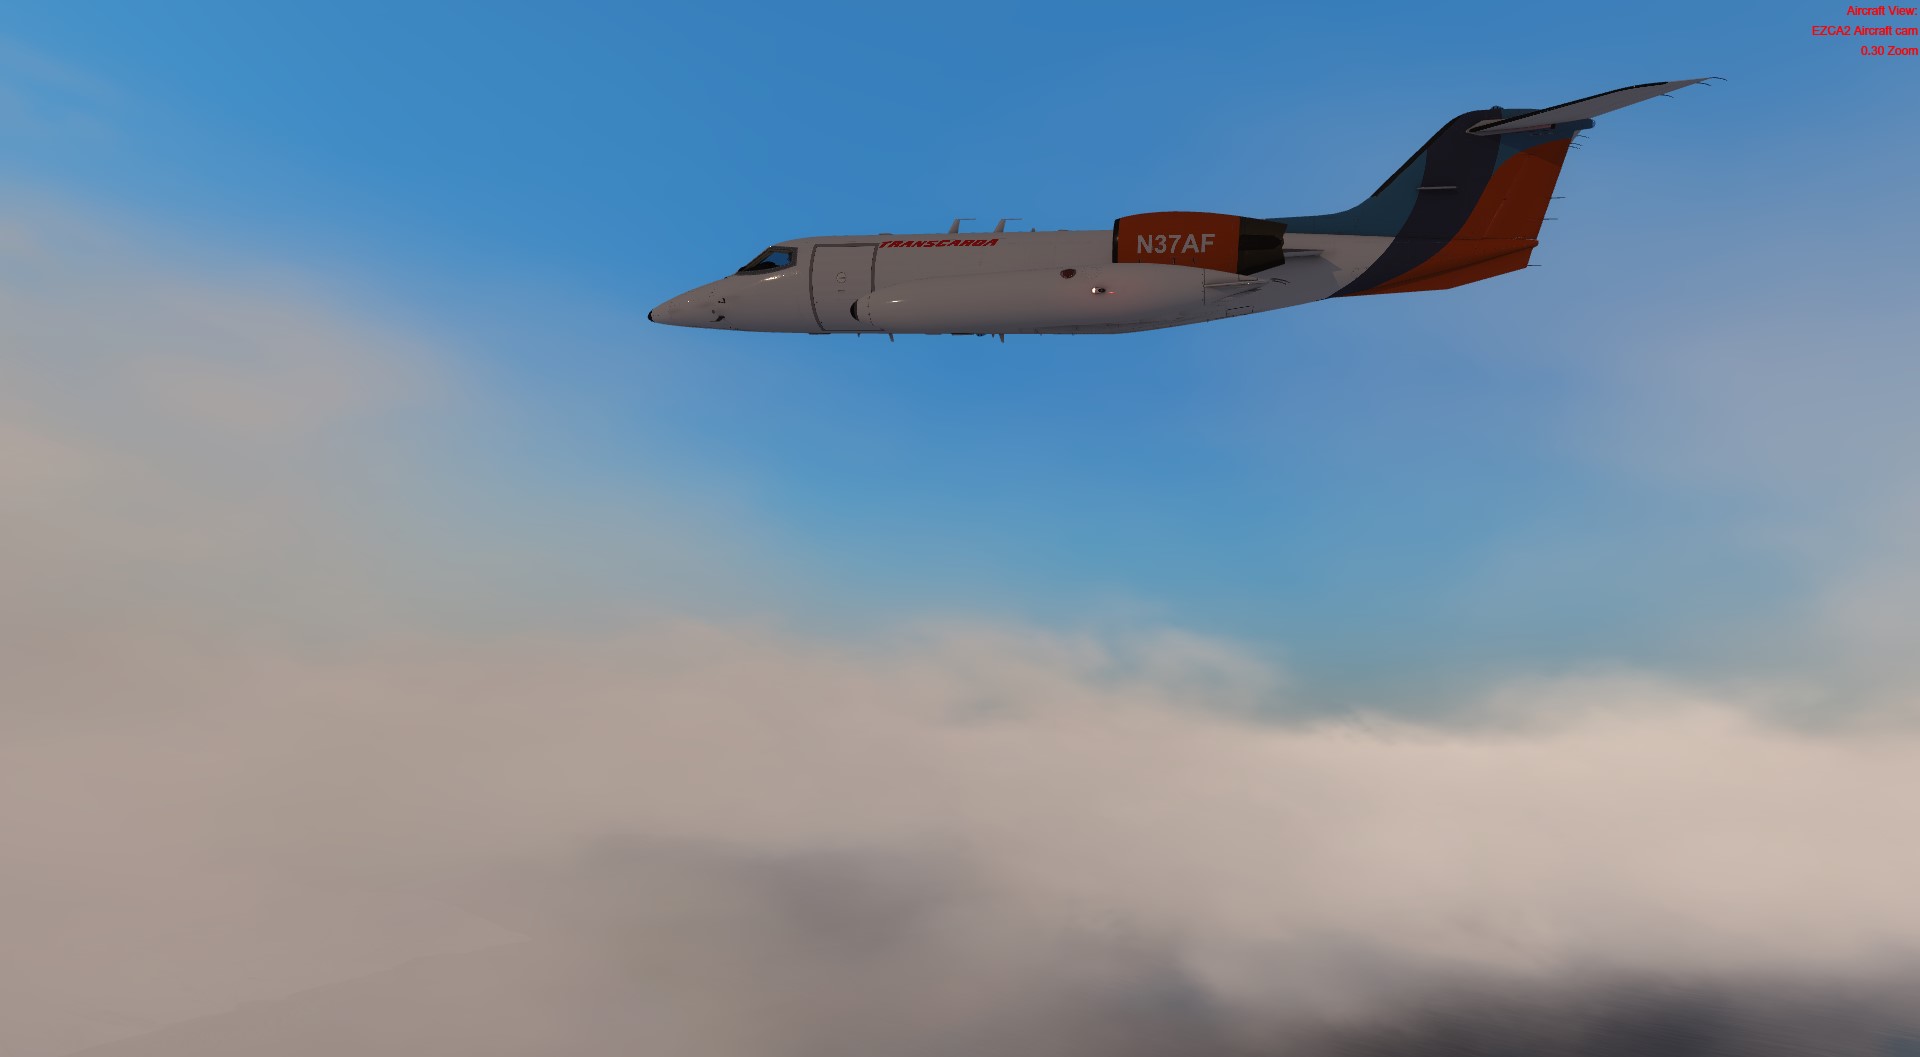 Flysimware – Learjet 35A 评测与冰岛送货之旅-189 